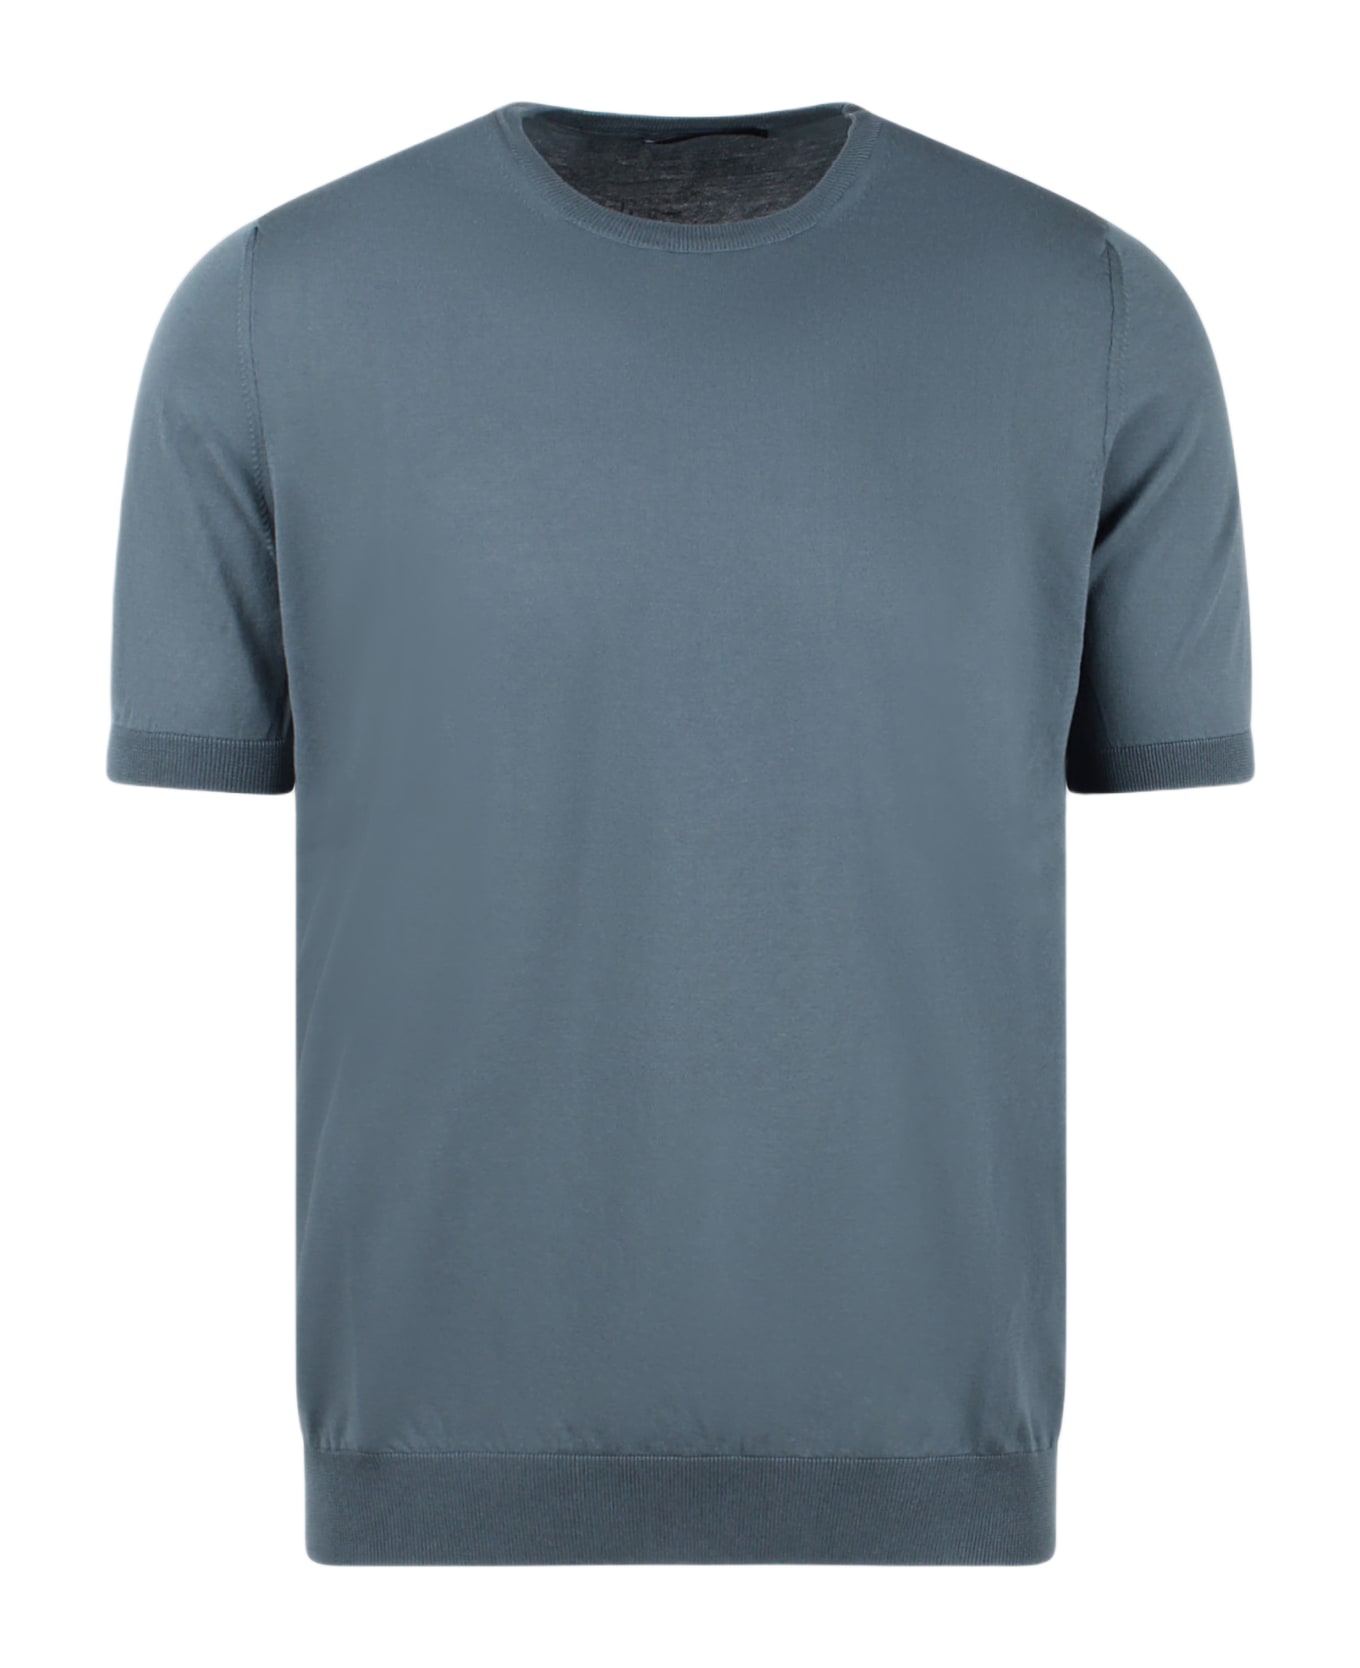 Tagliatore Cotton Knit T-shirt - Blue シャツ